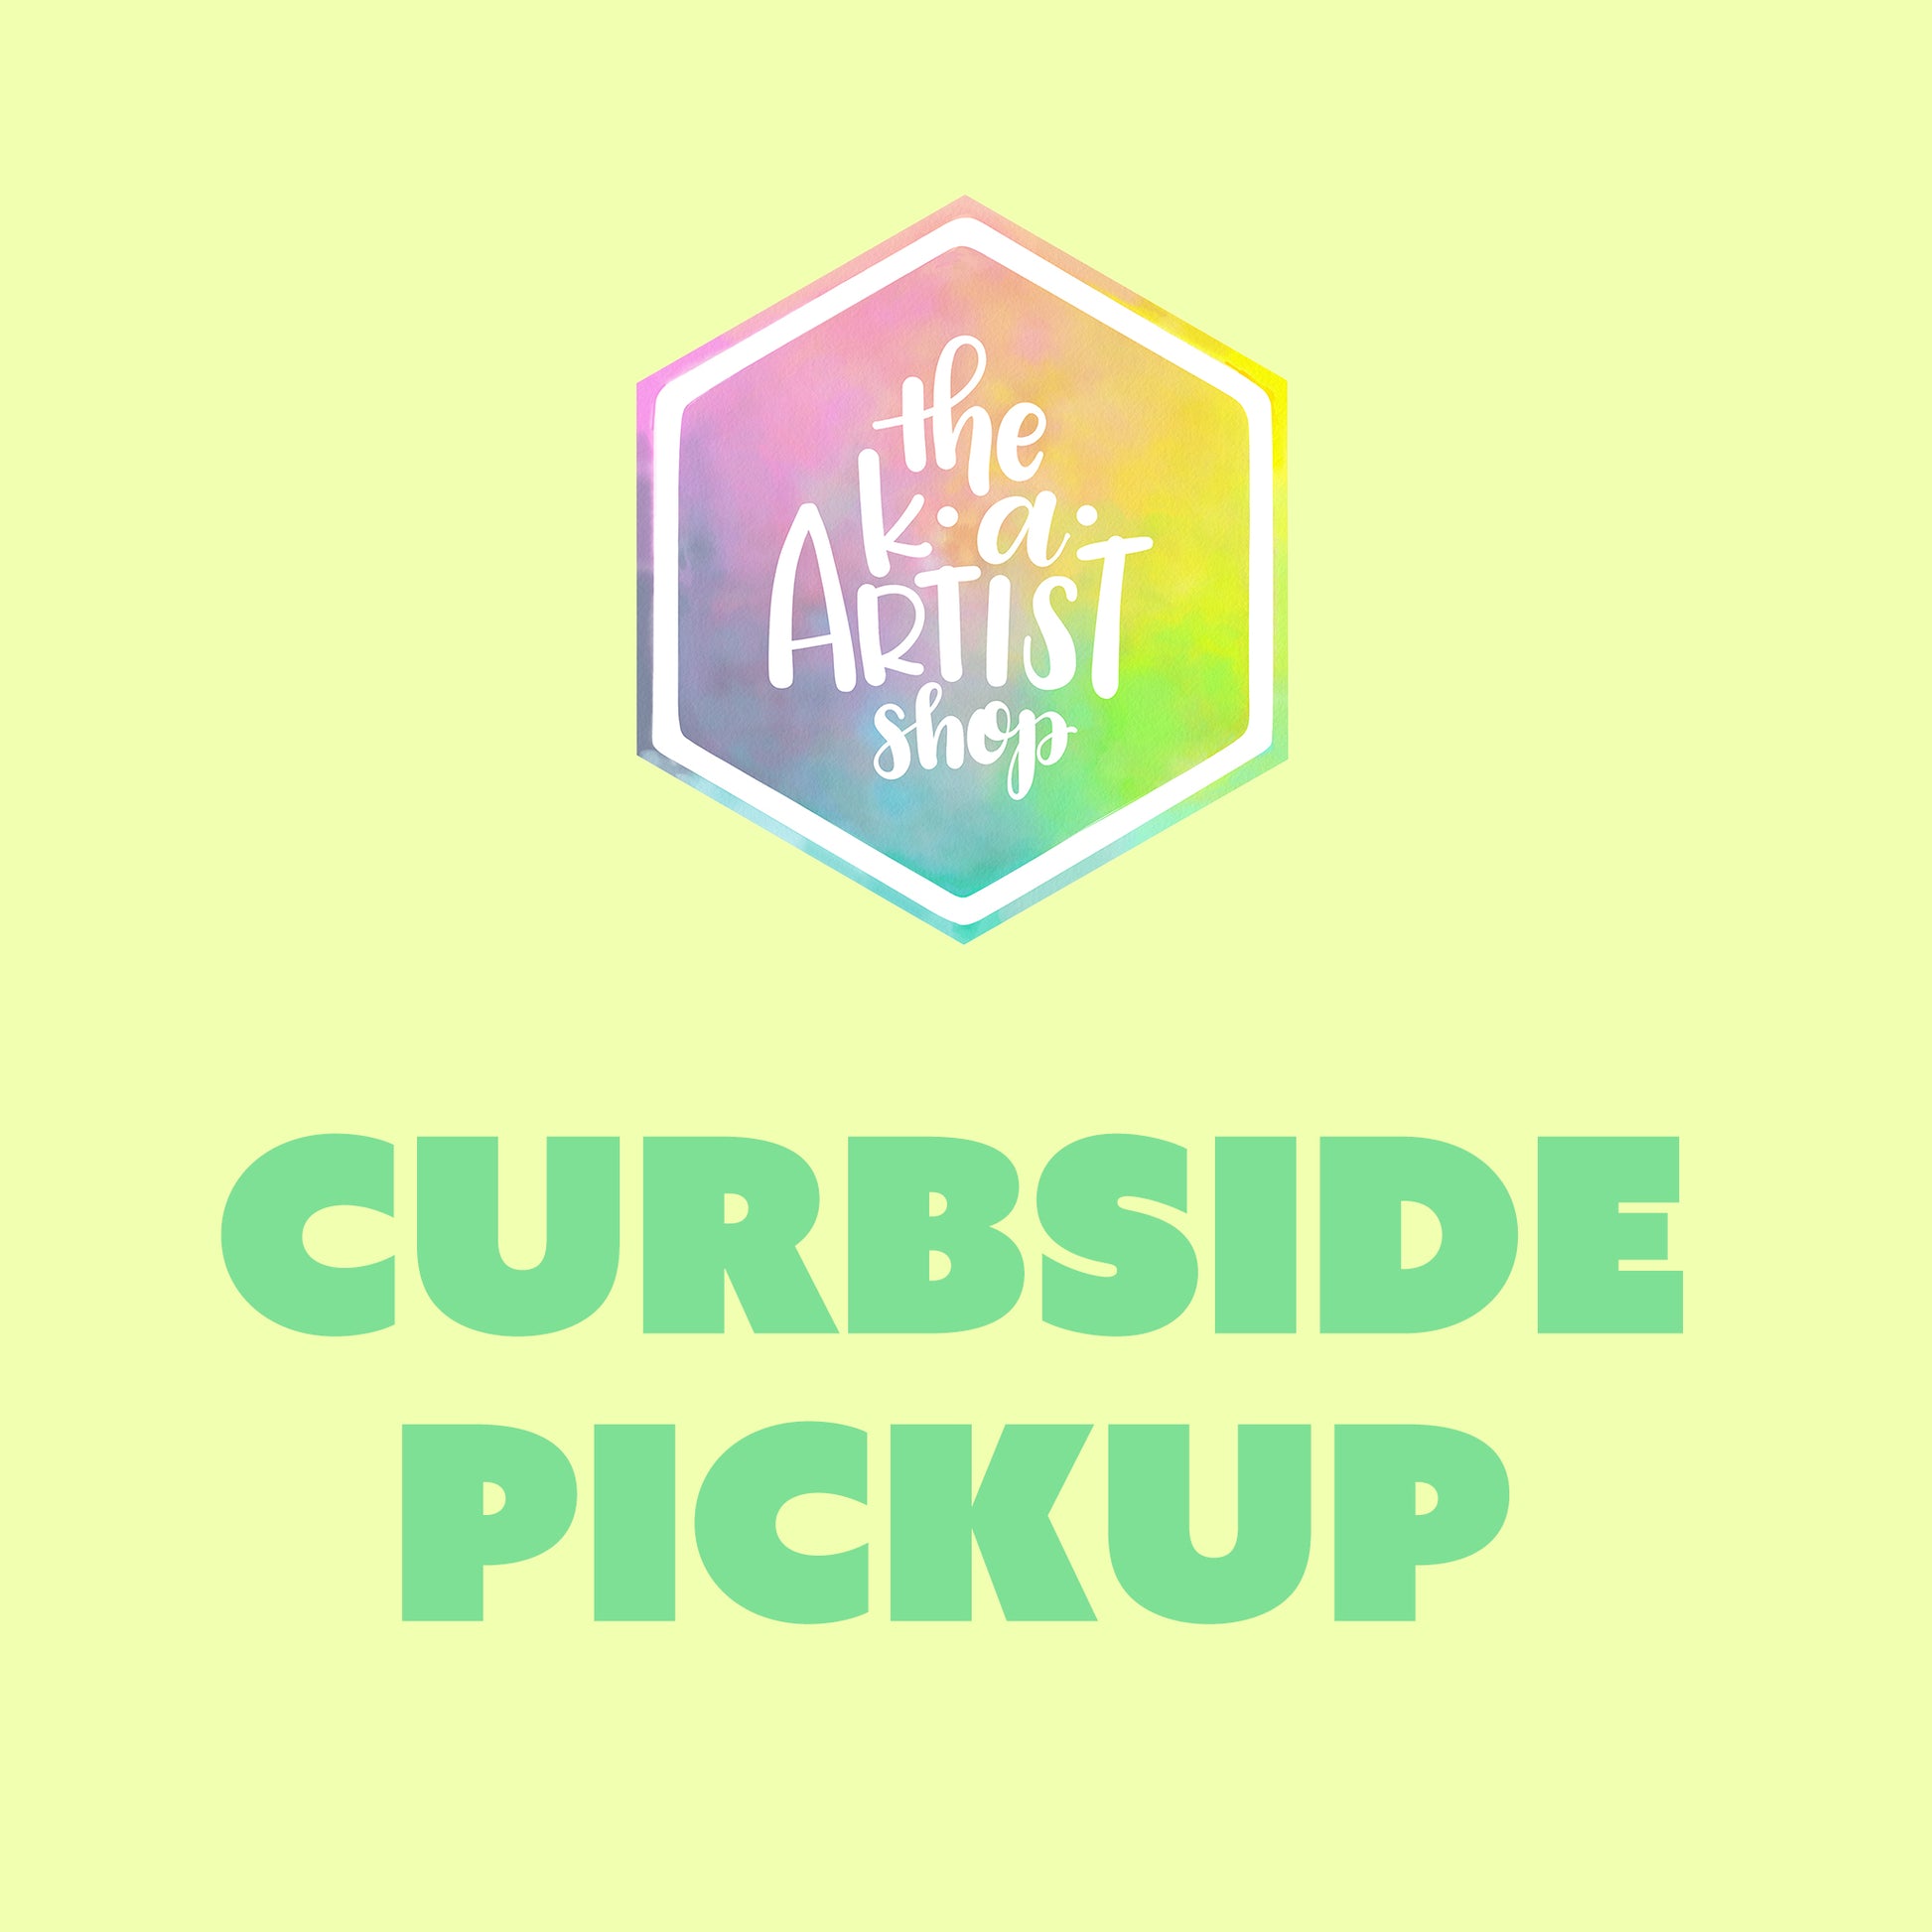 Curbside Pickup - by K. A. Artist Shop - K. A. Artist Shop